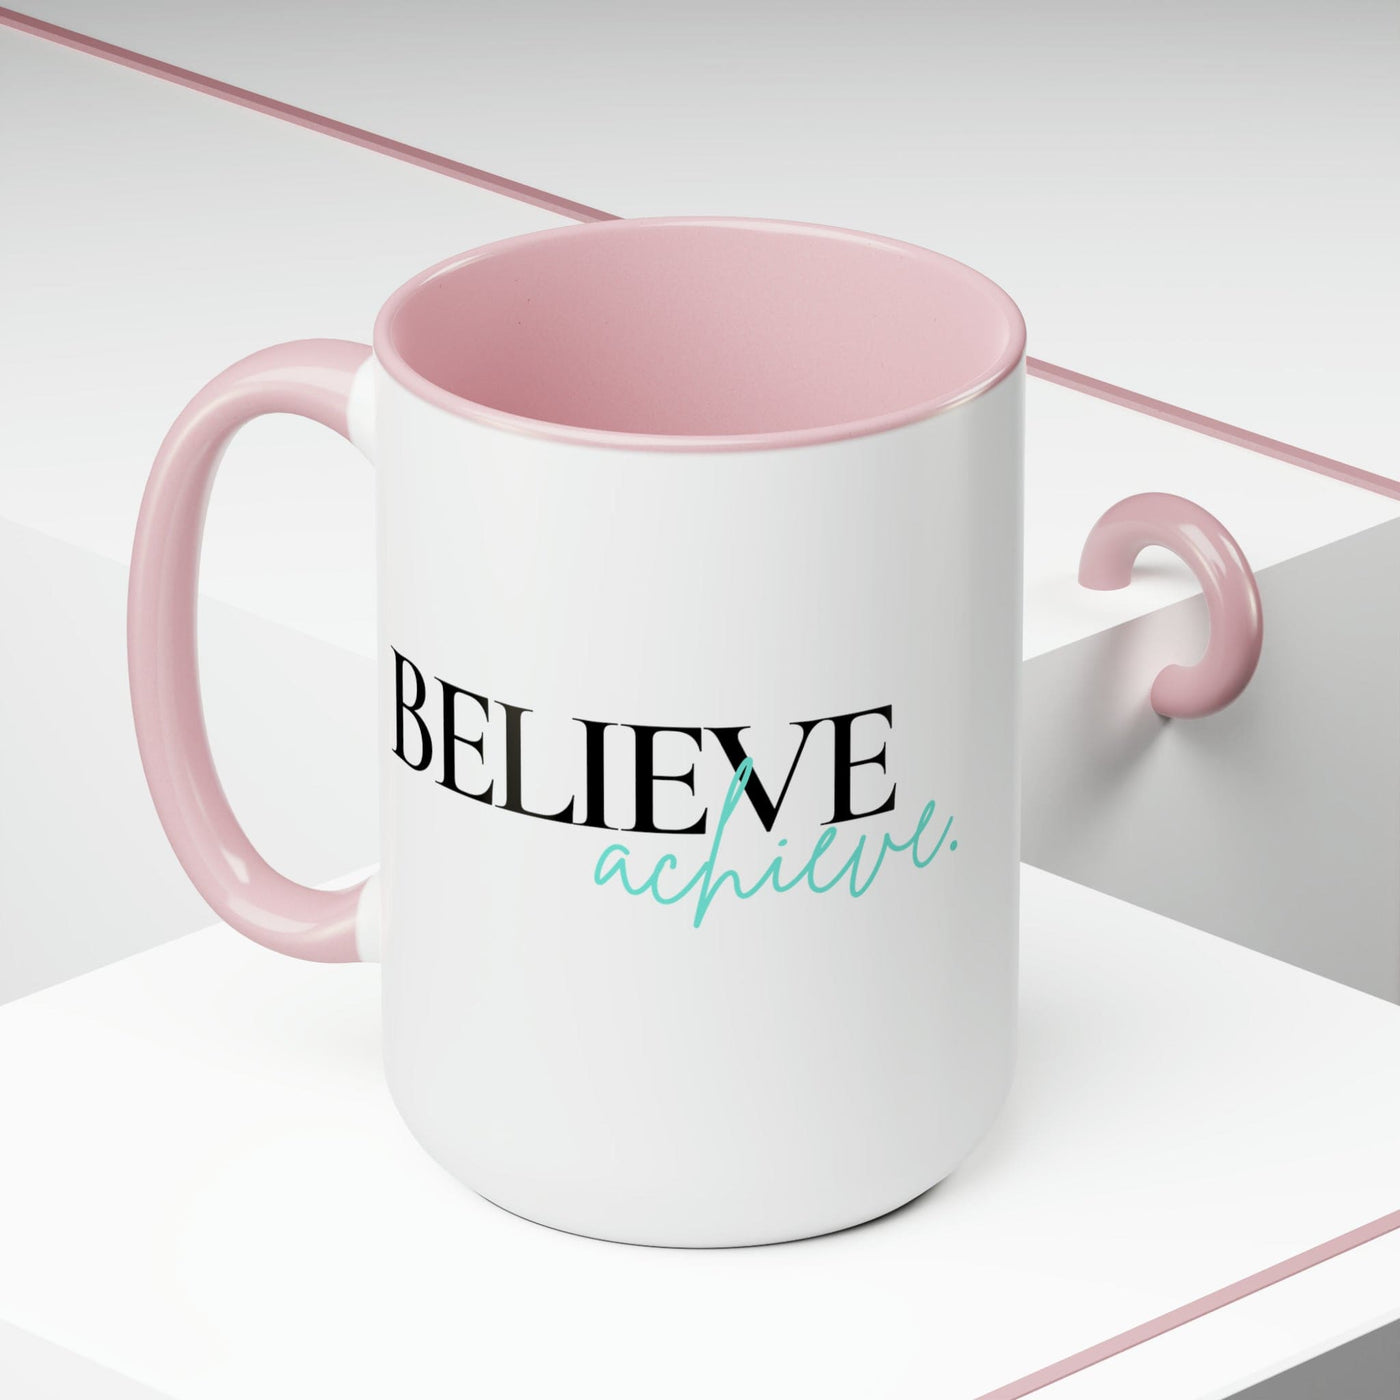 Accent Ceramic Coffee Mug 15oz - Believe And Achieve - Inspirational Motivation